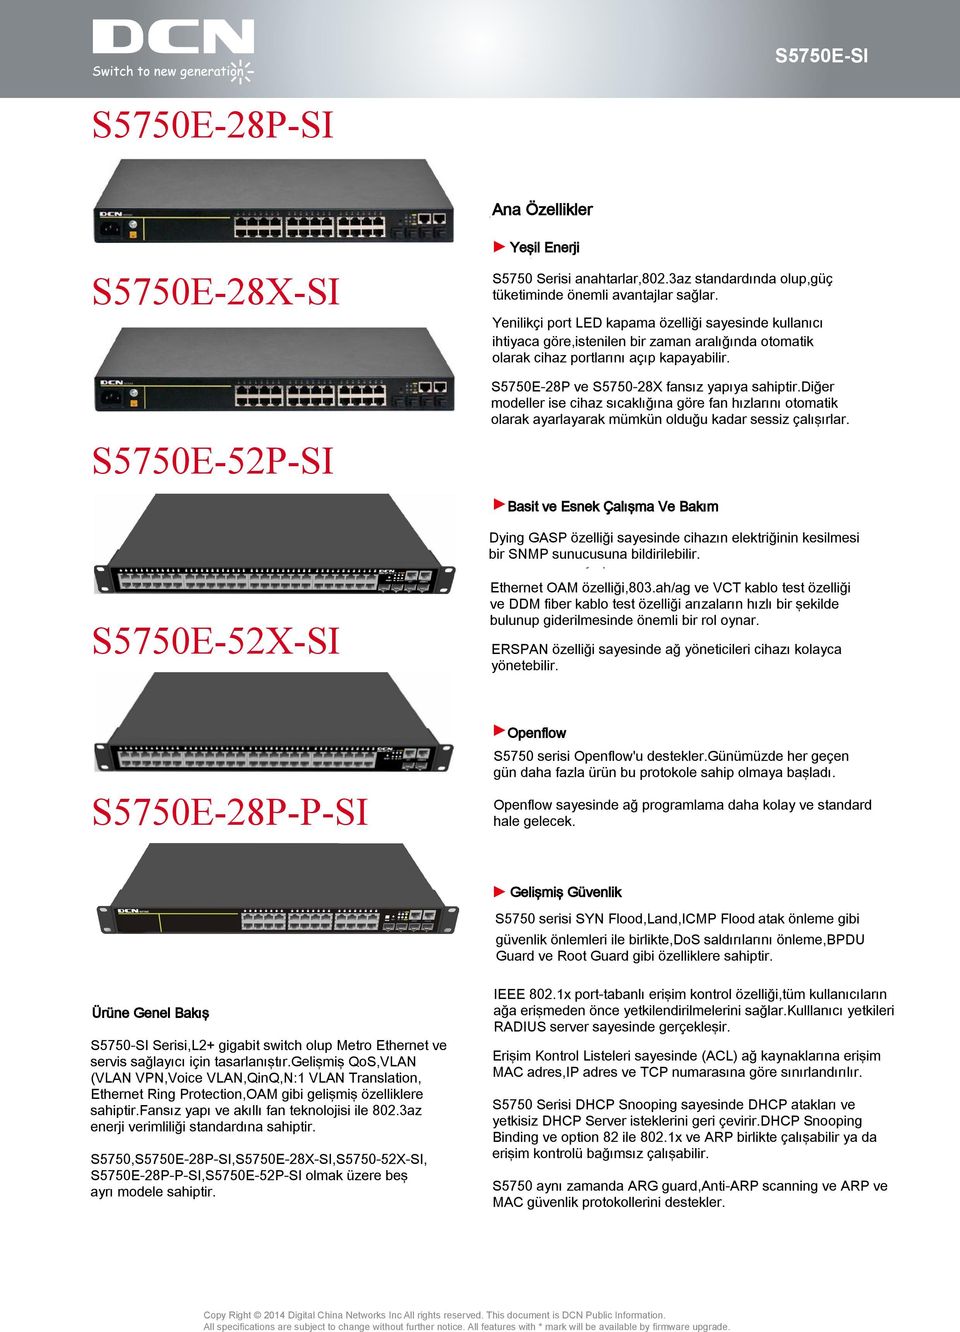 S5750E-28X-SI S5750E-52P-SI S5750E-52X-SI S5750E-28P-P-SI Product Ürüne Genel Overview Bakış S5750-SI S5750E-SI Serisi,L2+ Series L2 gigabit Gigabits switch intelligent olup Metro switch Ethernet